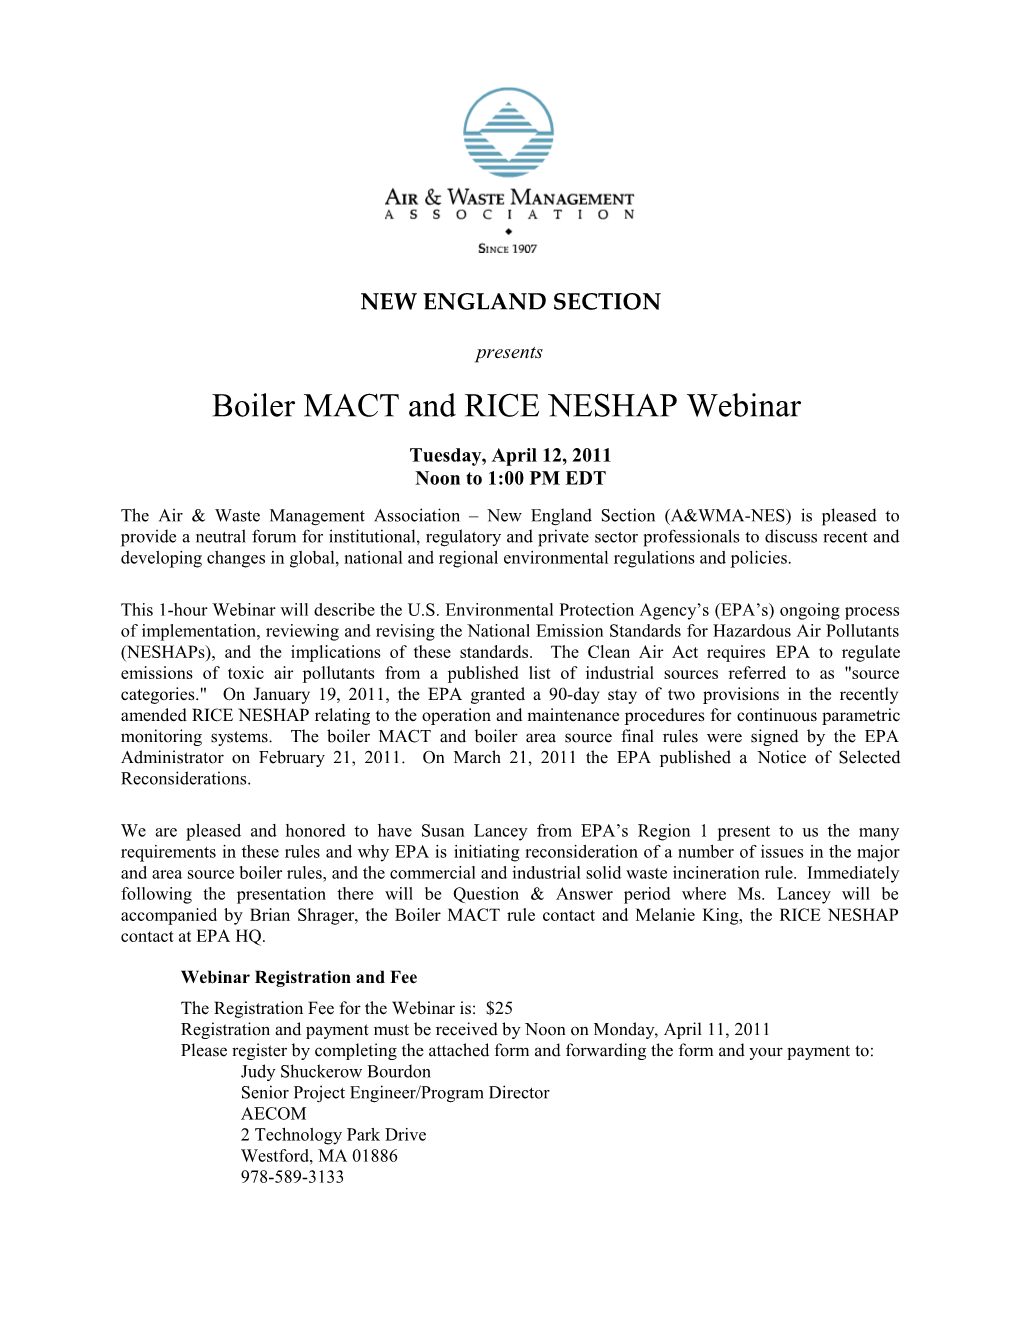 Boiler MACT and RICE NESHAP Webinar